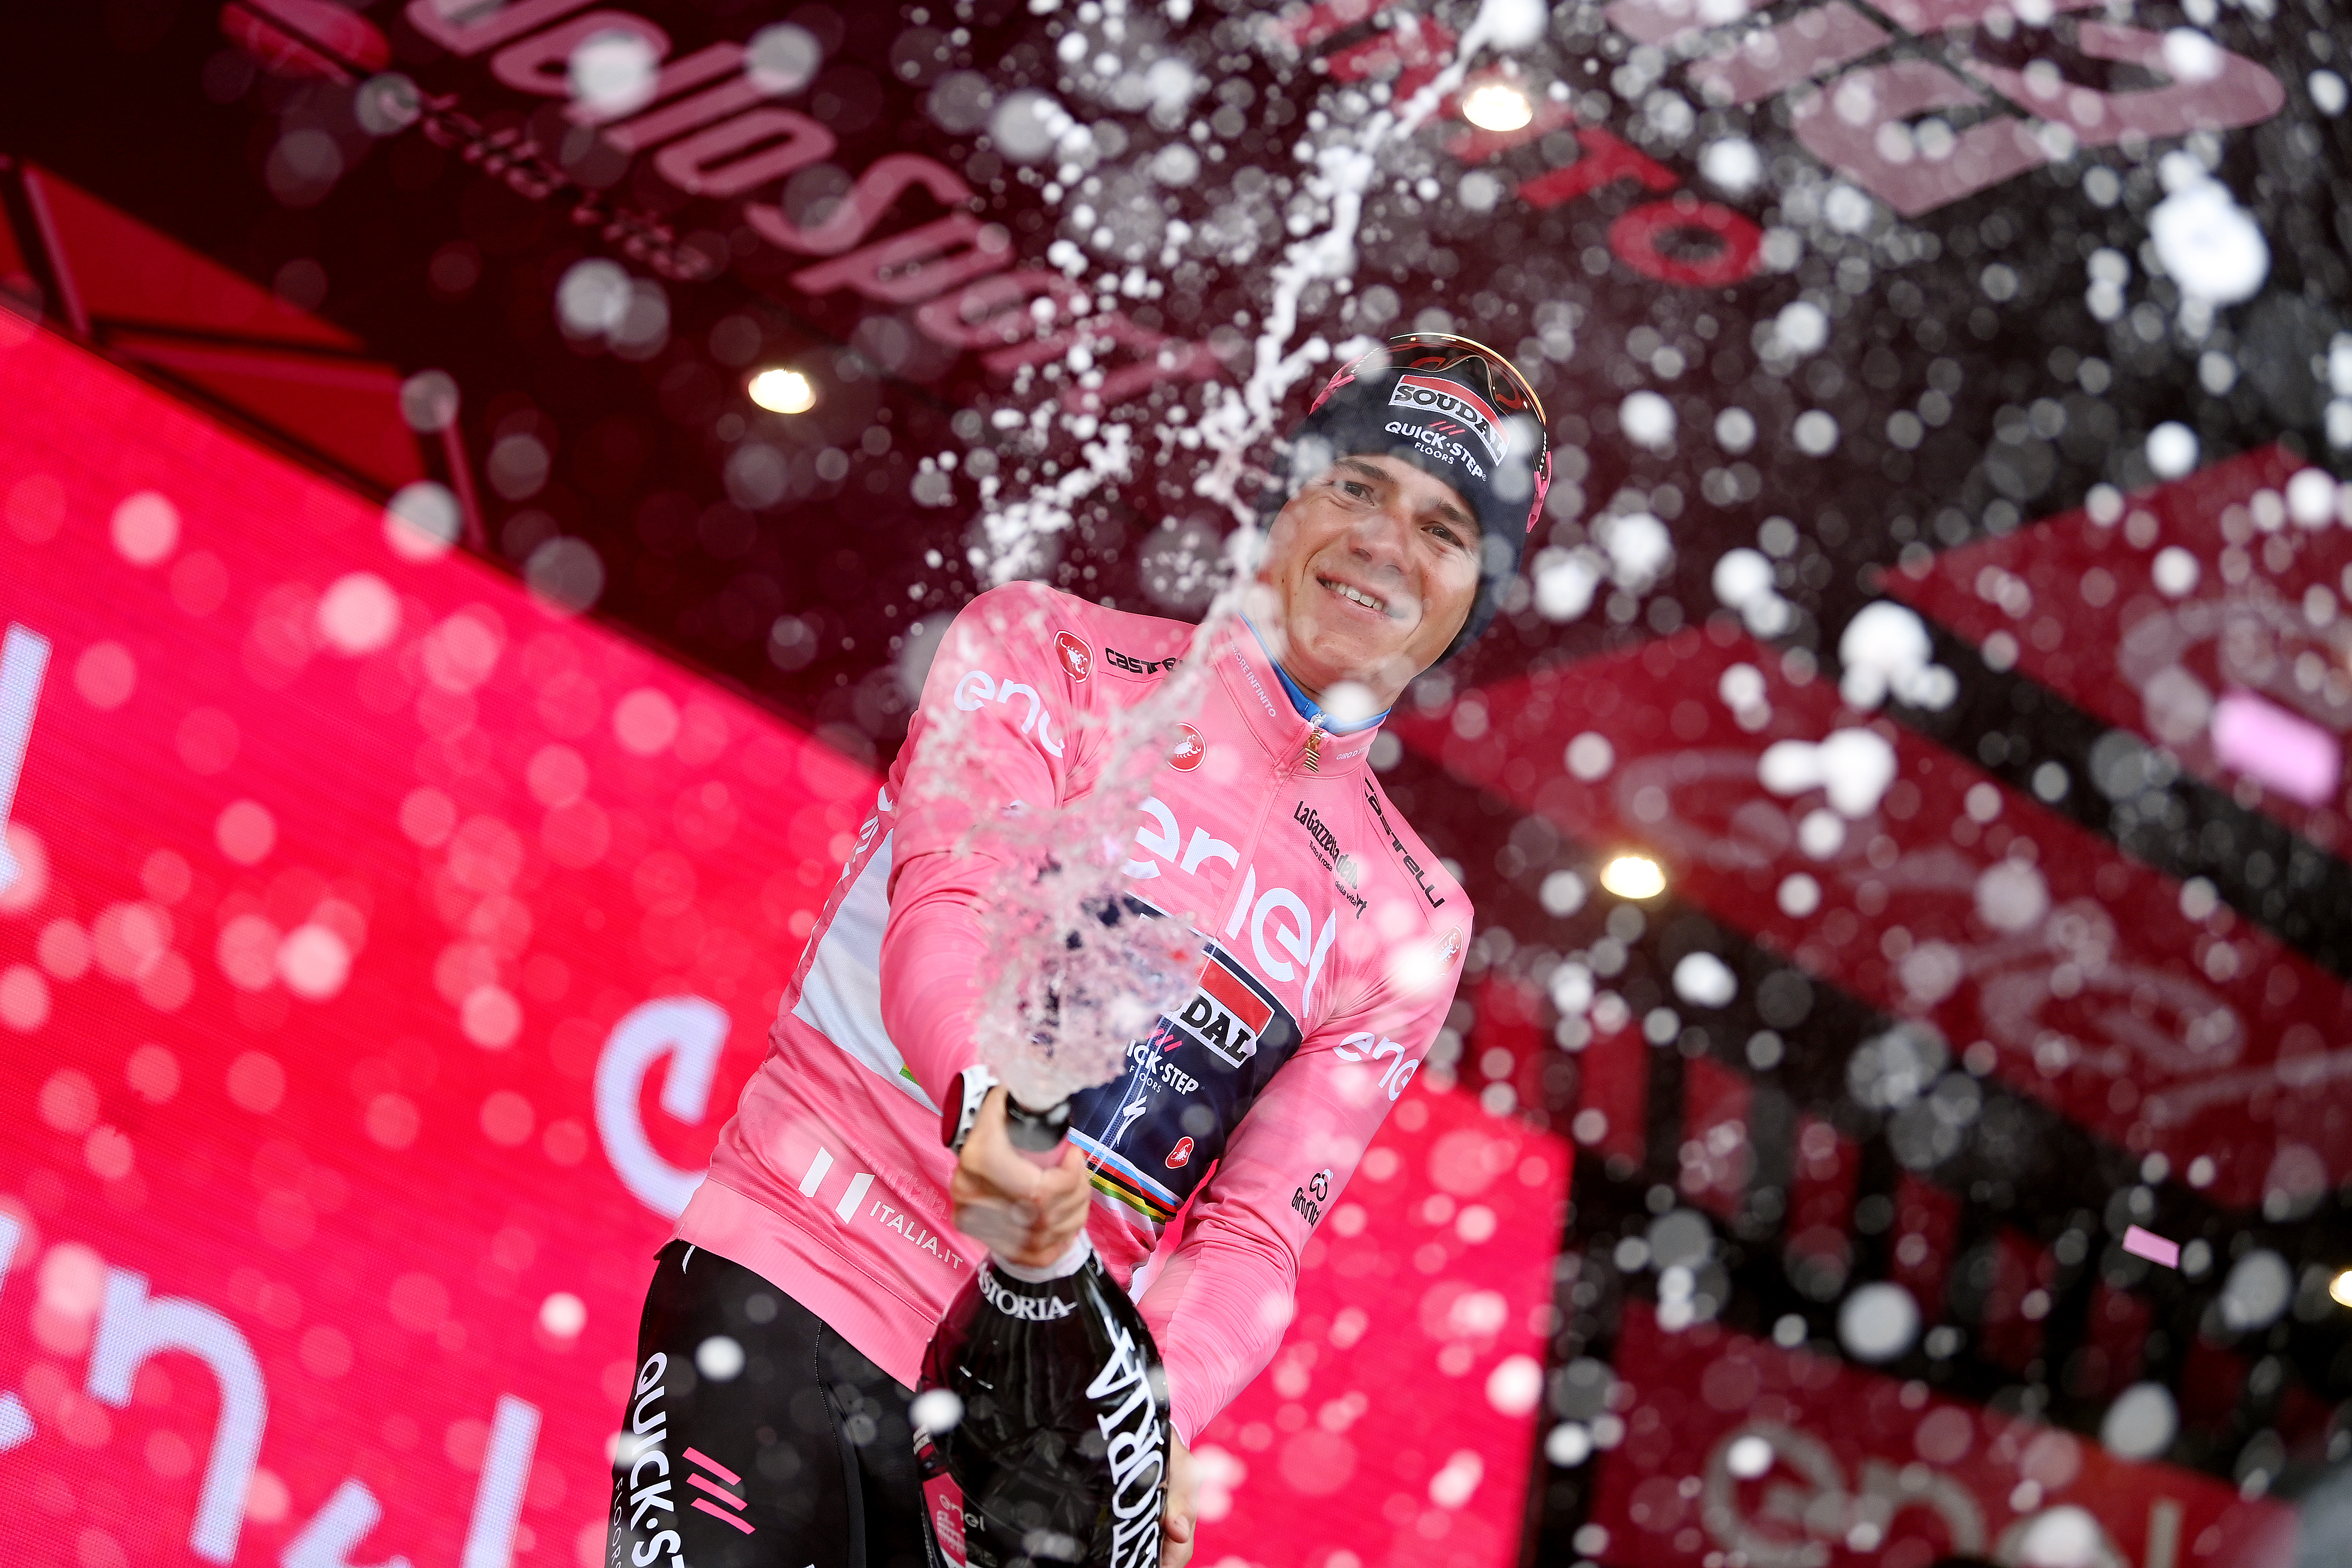 Remco Evenepoel spraying champagne at the Giro d'Italia